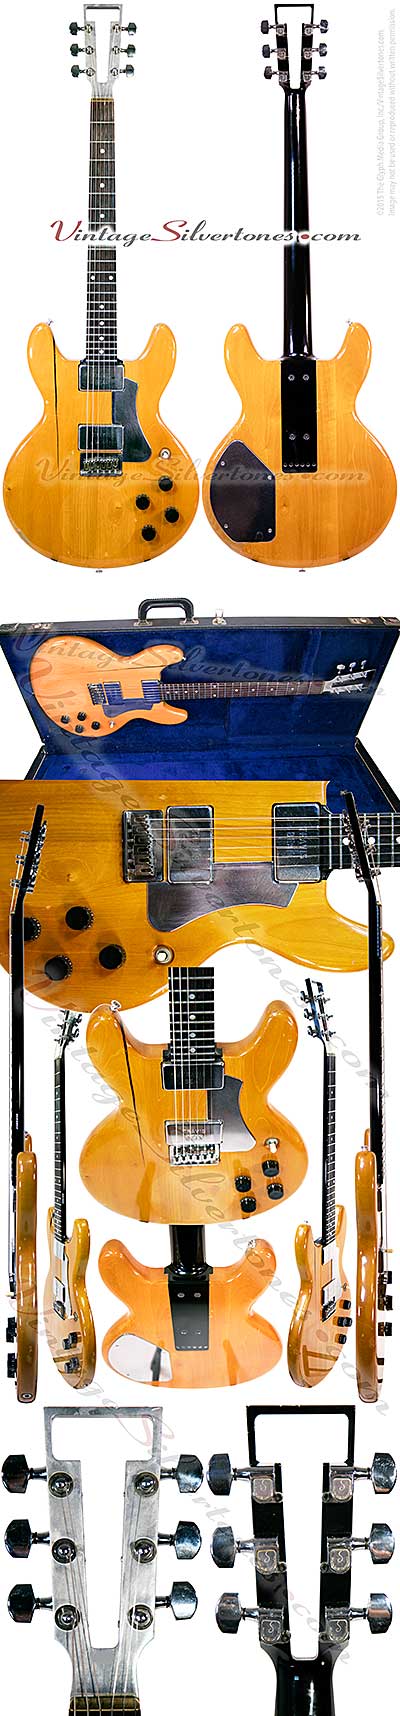 Travis Bean 1000s-Sun Valley, CA 2 humbucking pickups, electric guitar, 1978, natural finish, Koa, double cutaway